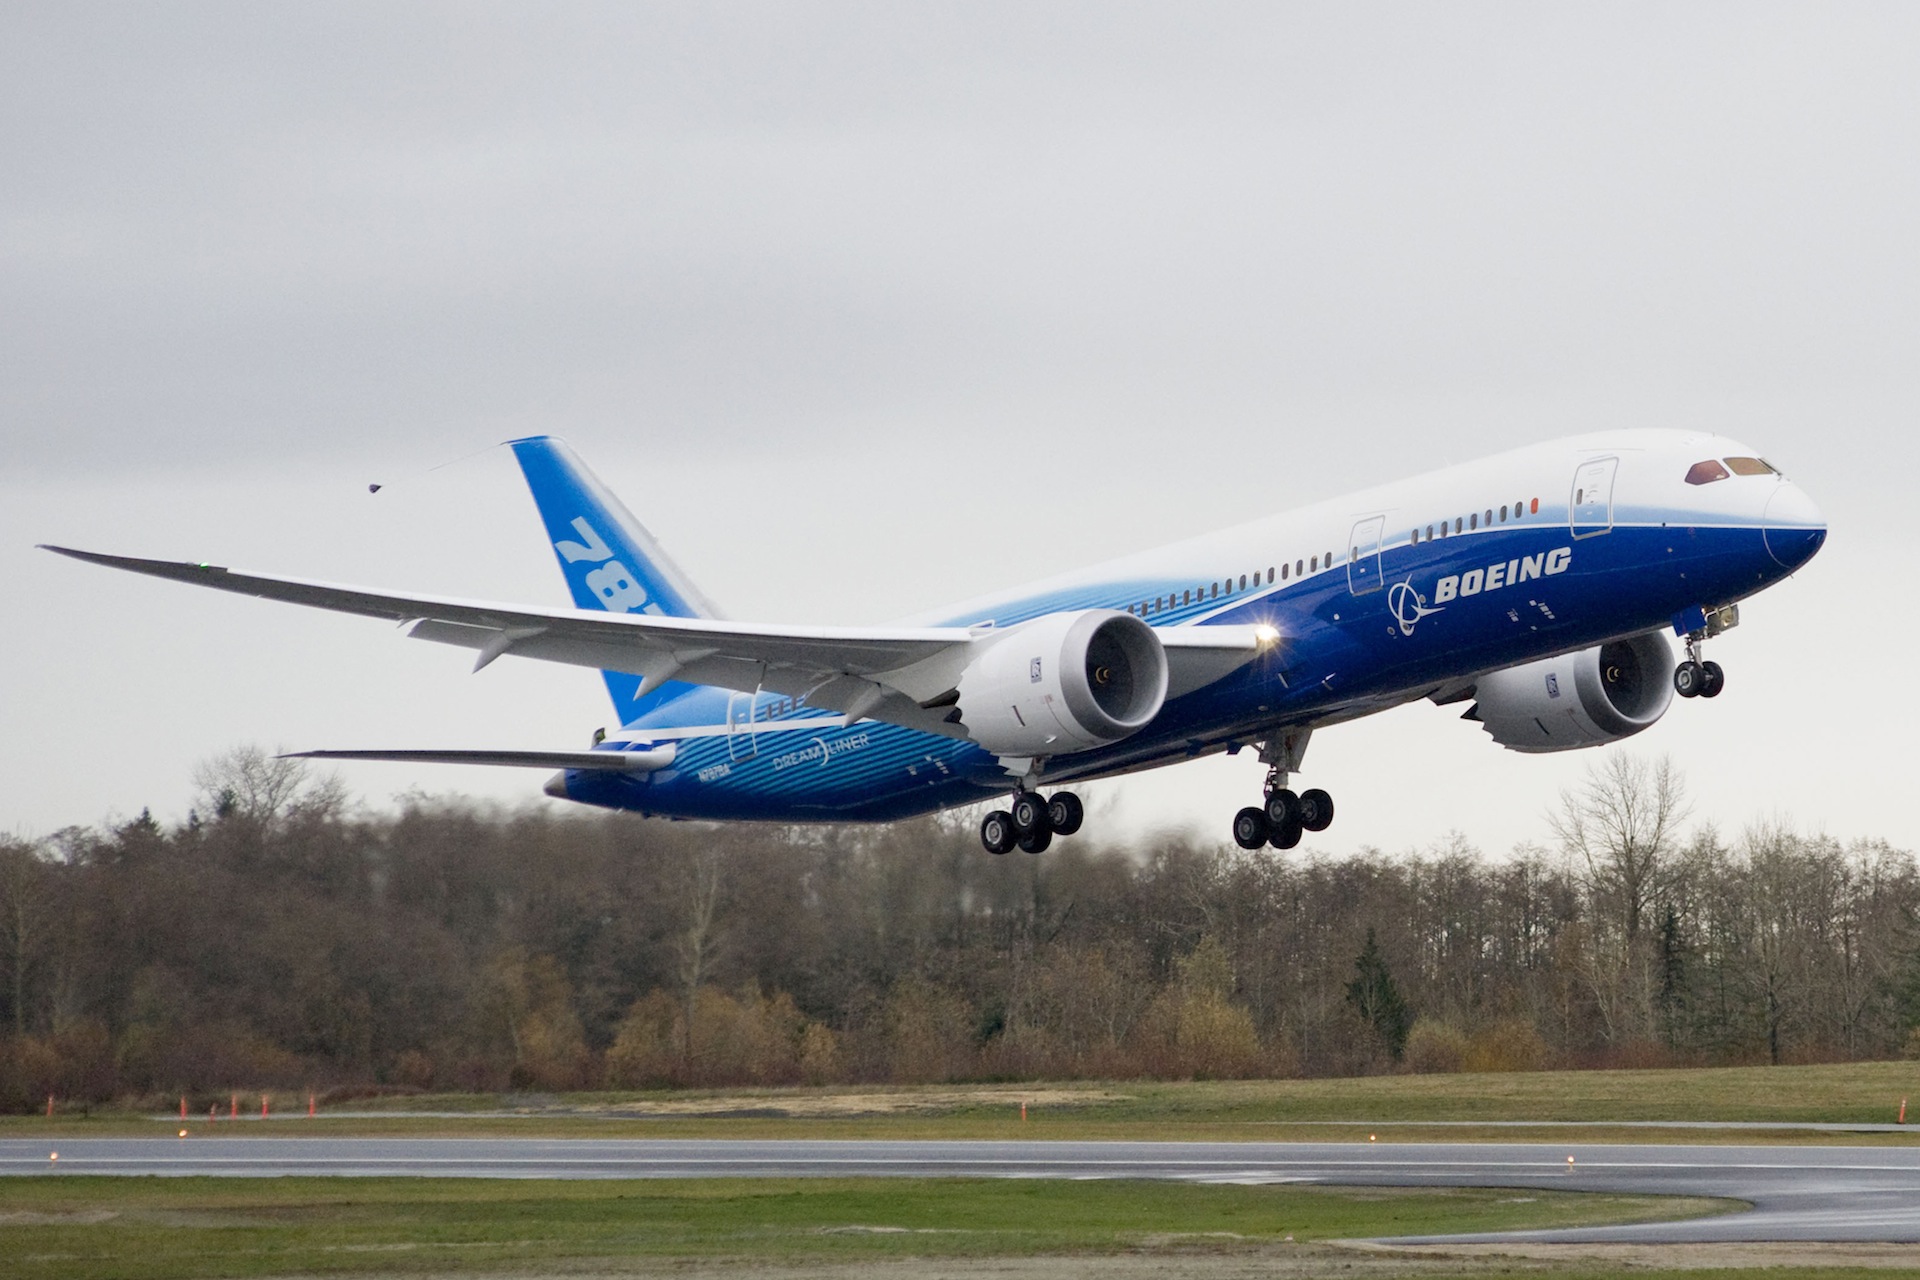 Boeing Donates First 787 8 Dreamliner Za001 To Nagoya Airport